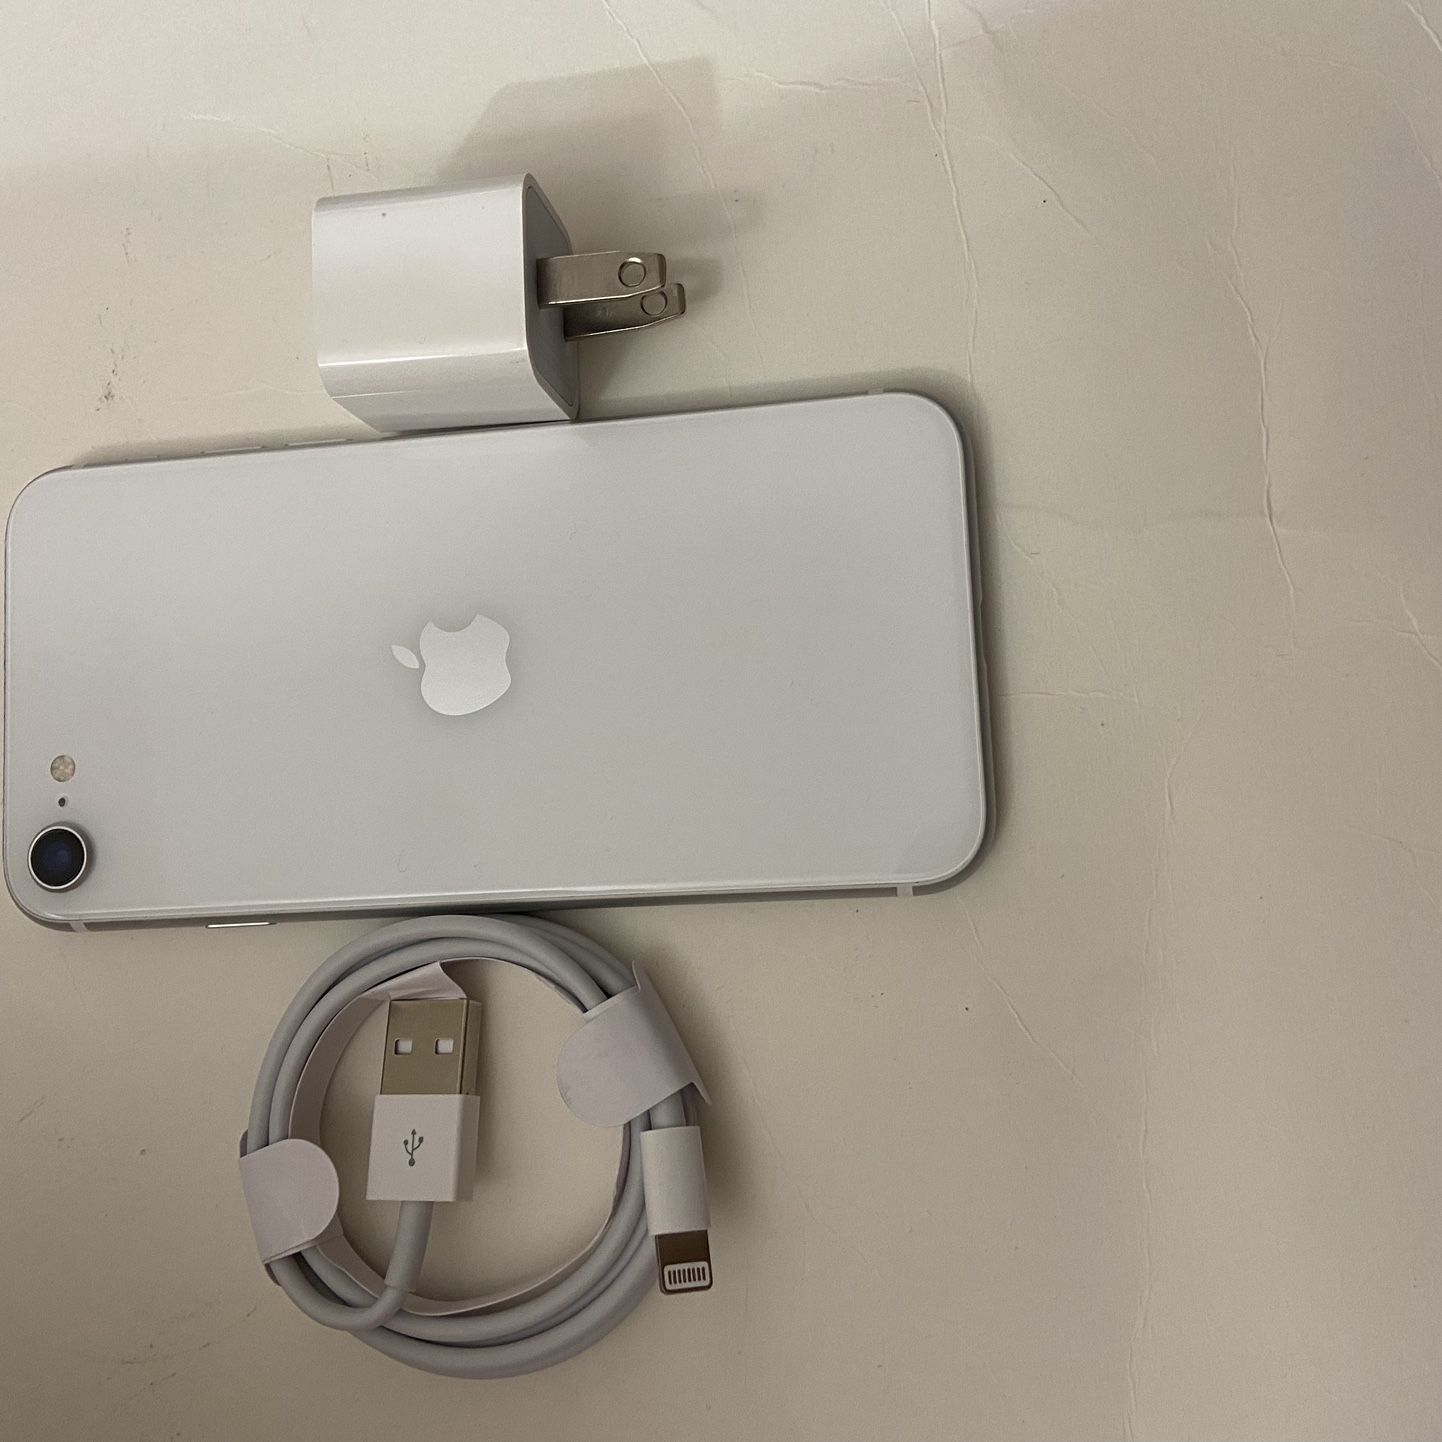 iPhone SE 2nd Gen 64 Gb Factory Unlocked (firm Price)